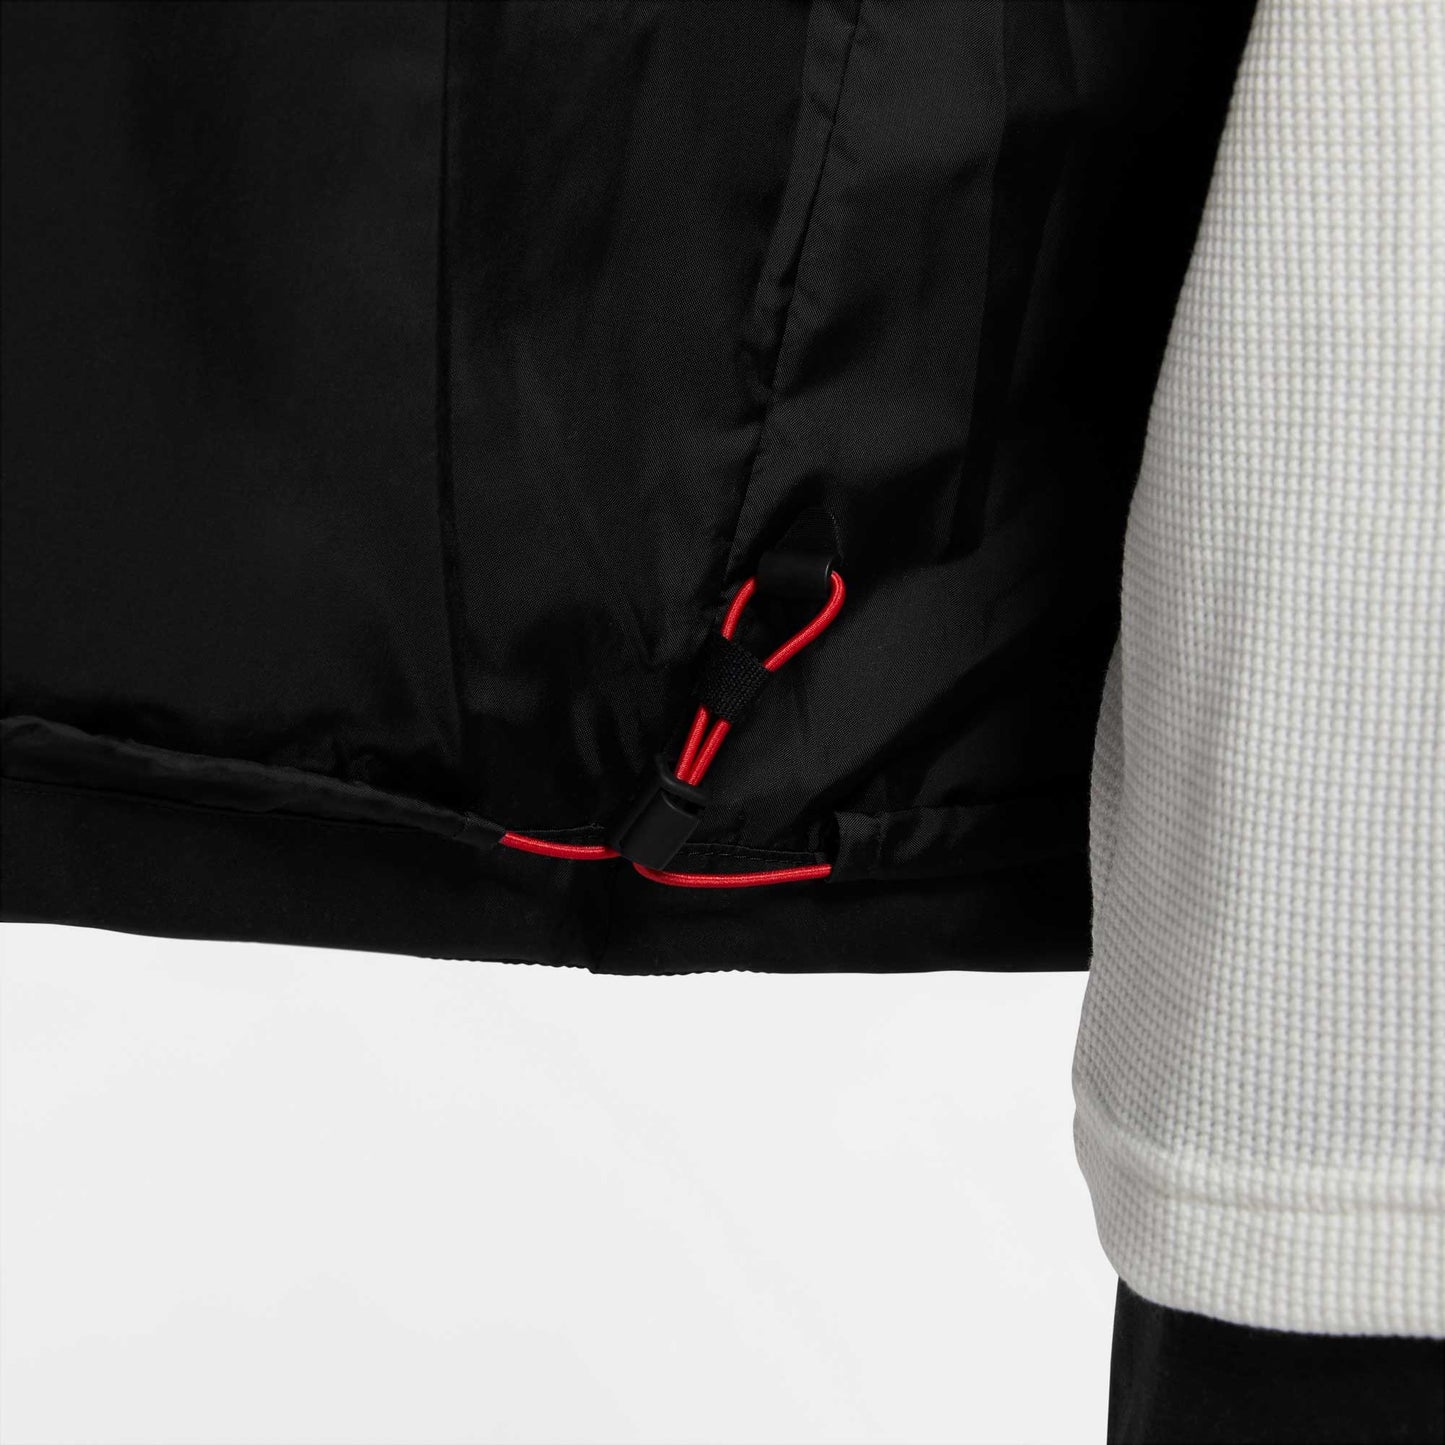 Nike SB Storm-fit Ishod Wair jacket, black/anthracite/university red - Tiki Room Skateboards - 5